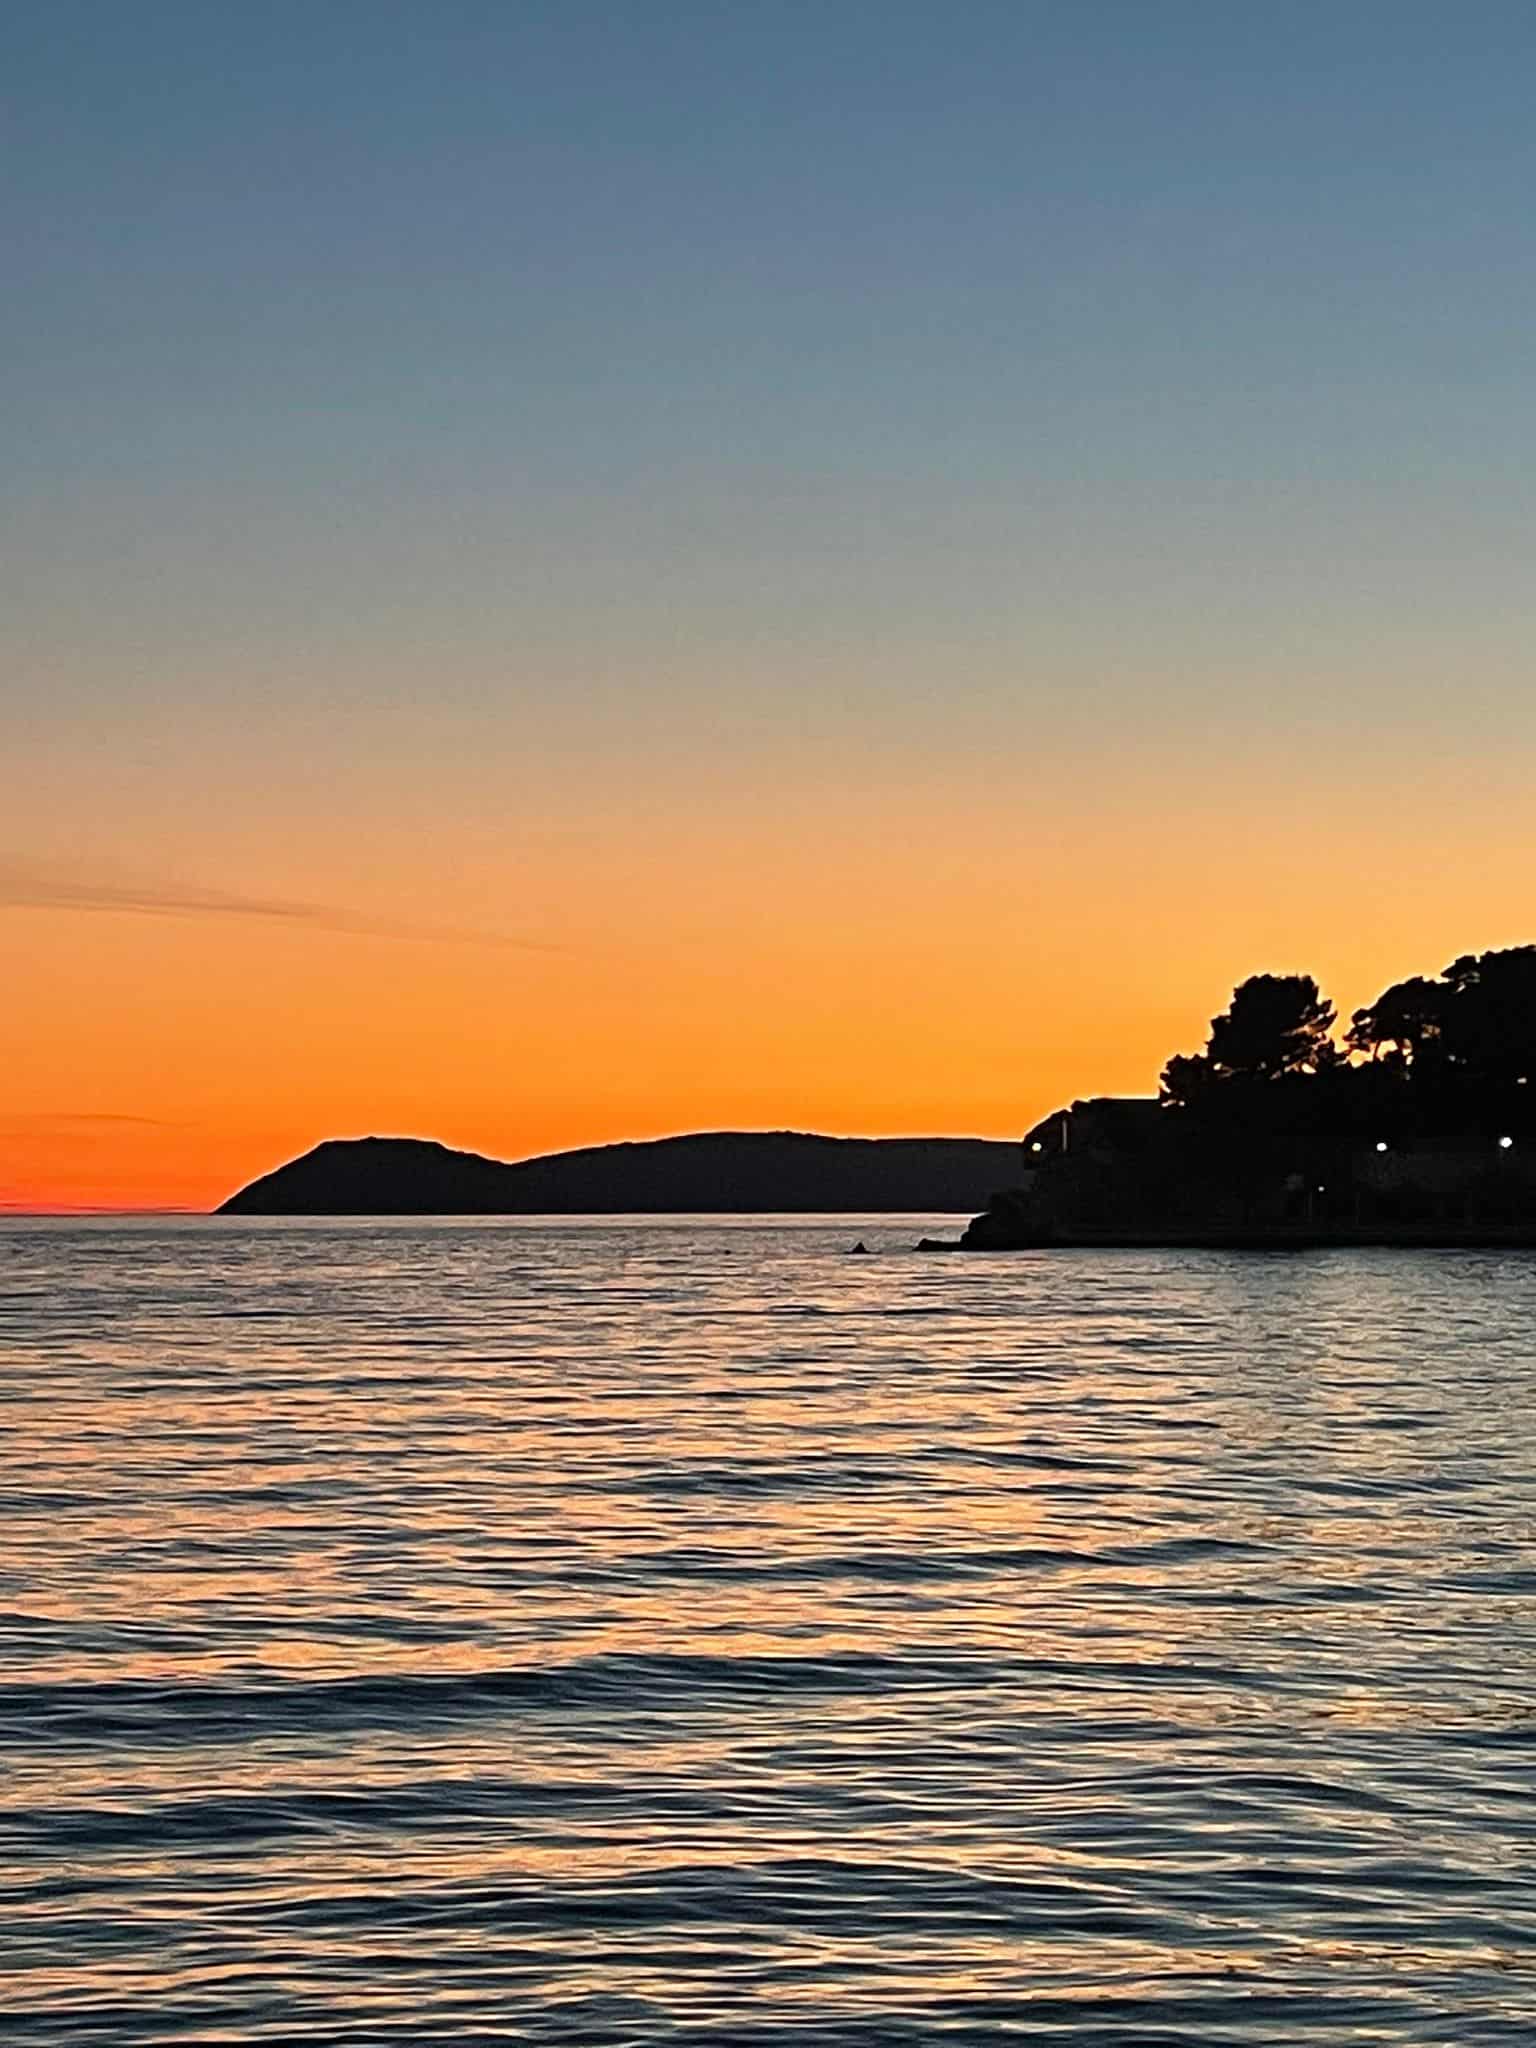 The sun setting over the Adriatic Sea in Split, Croatia